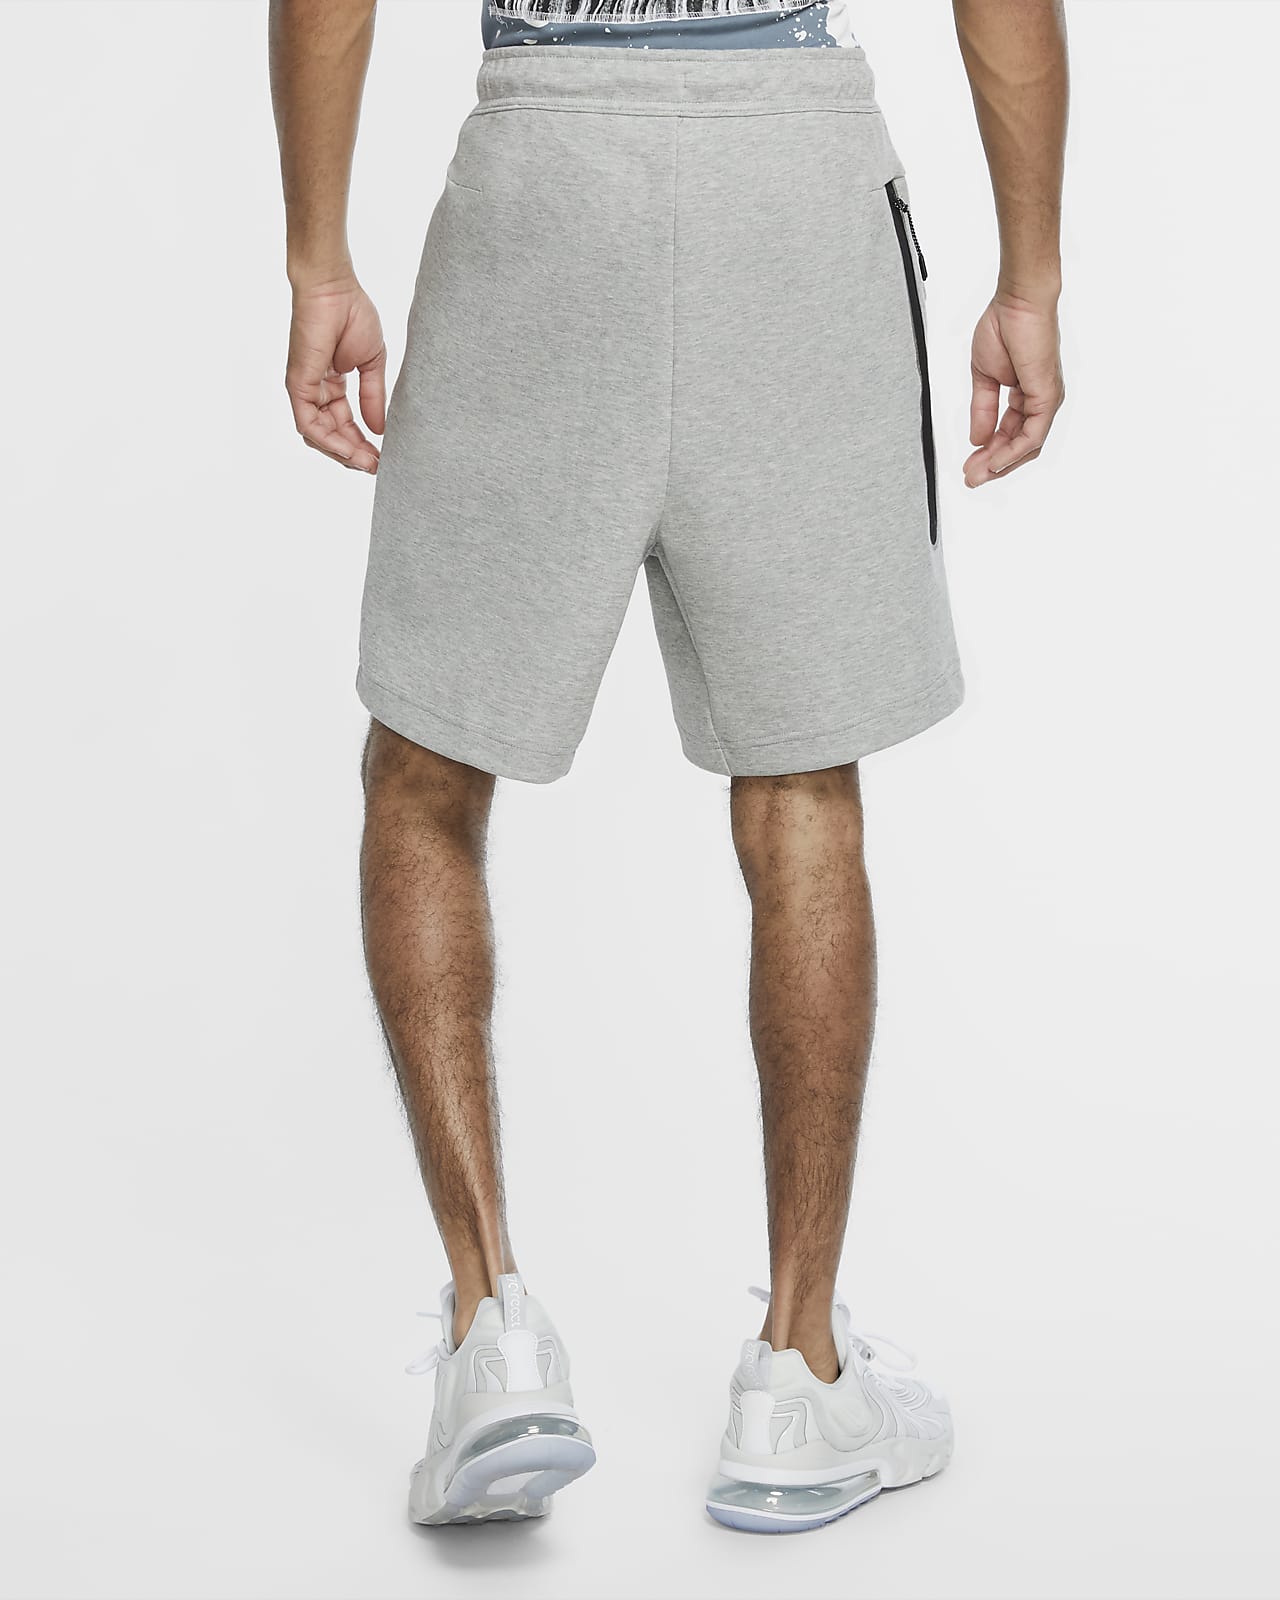 Nike Tech Fleece Printed Shorts Men s Size L Red 819598-657